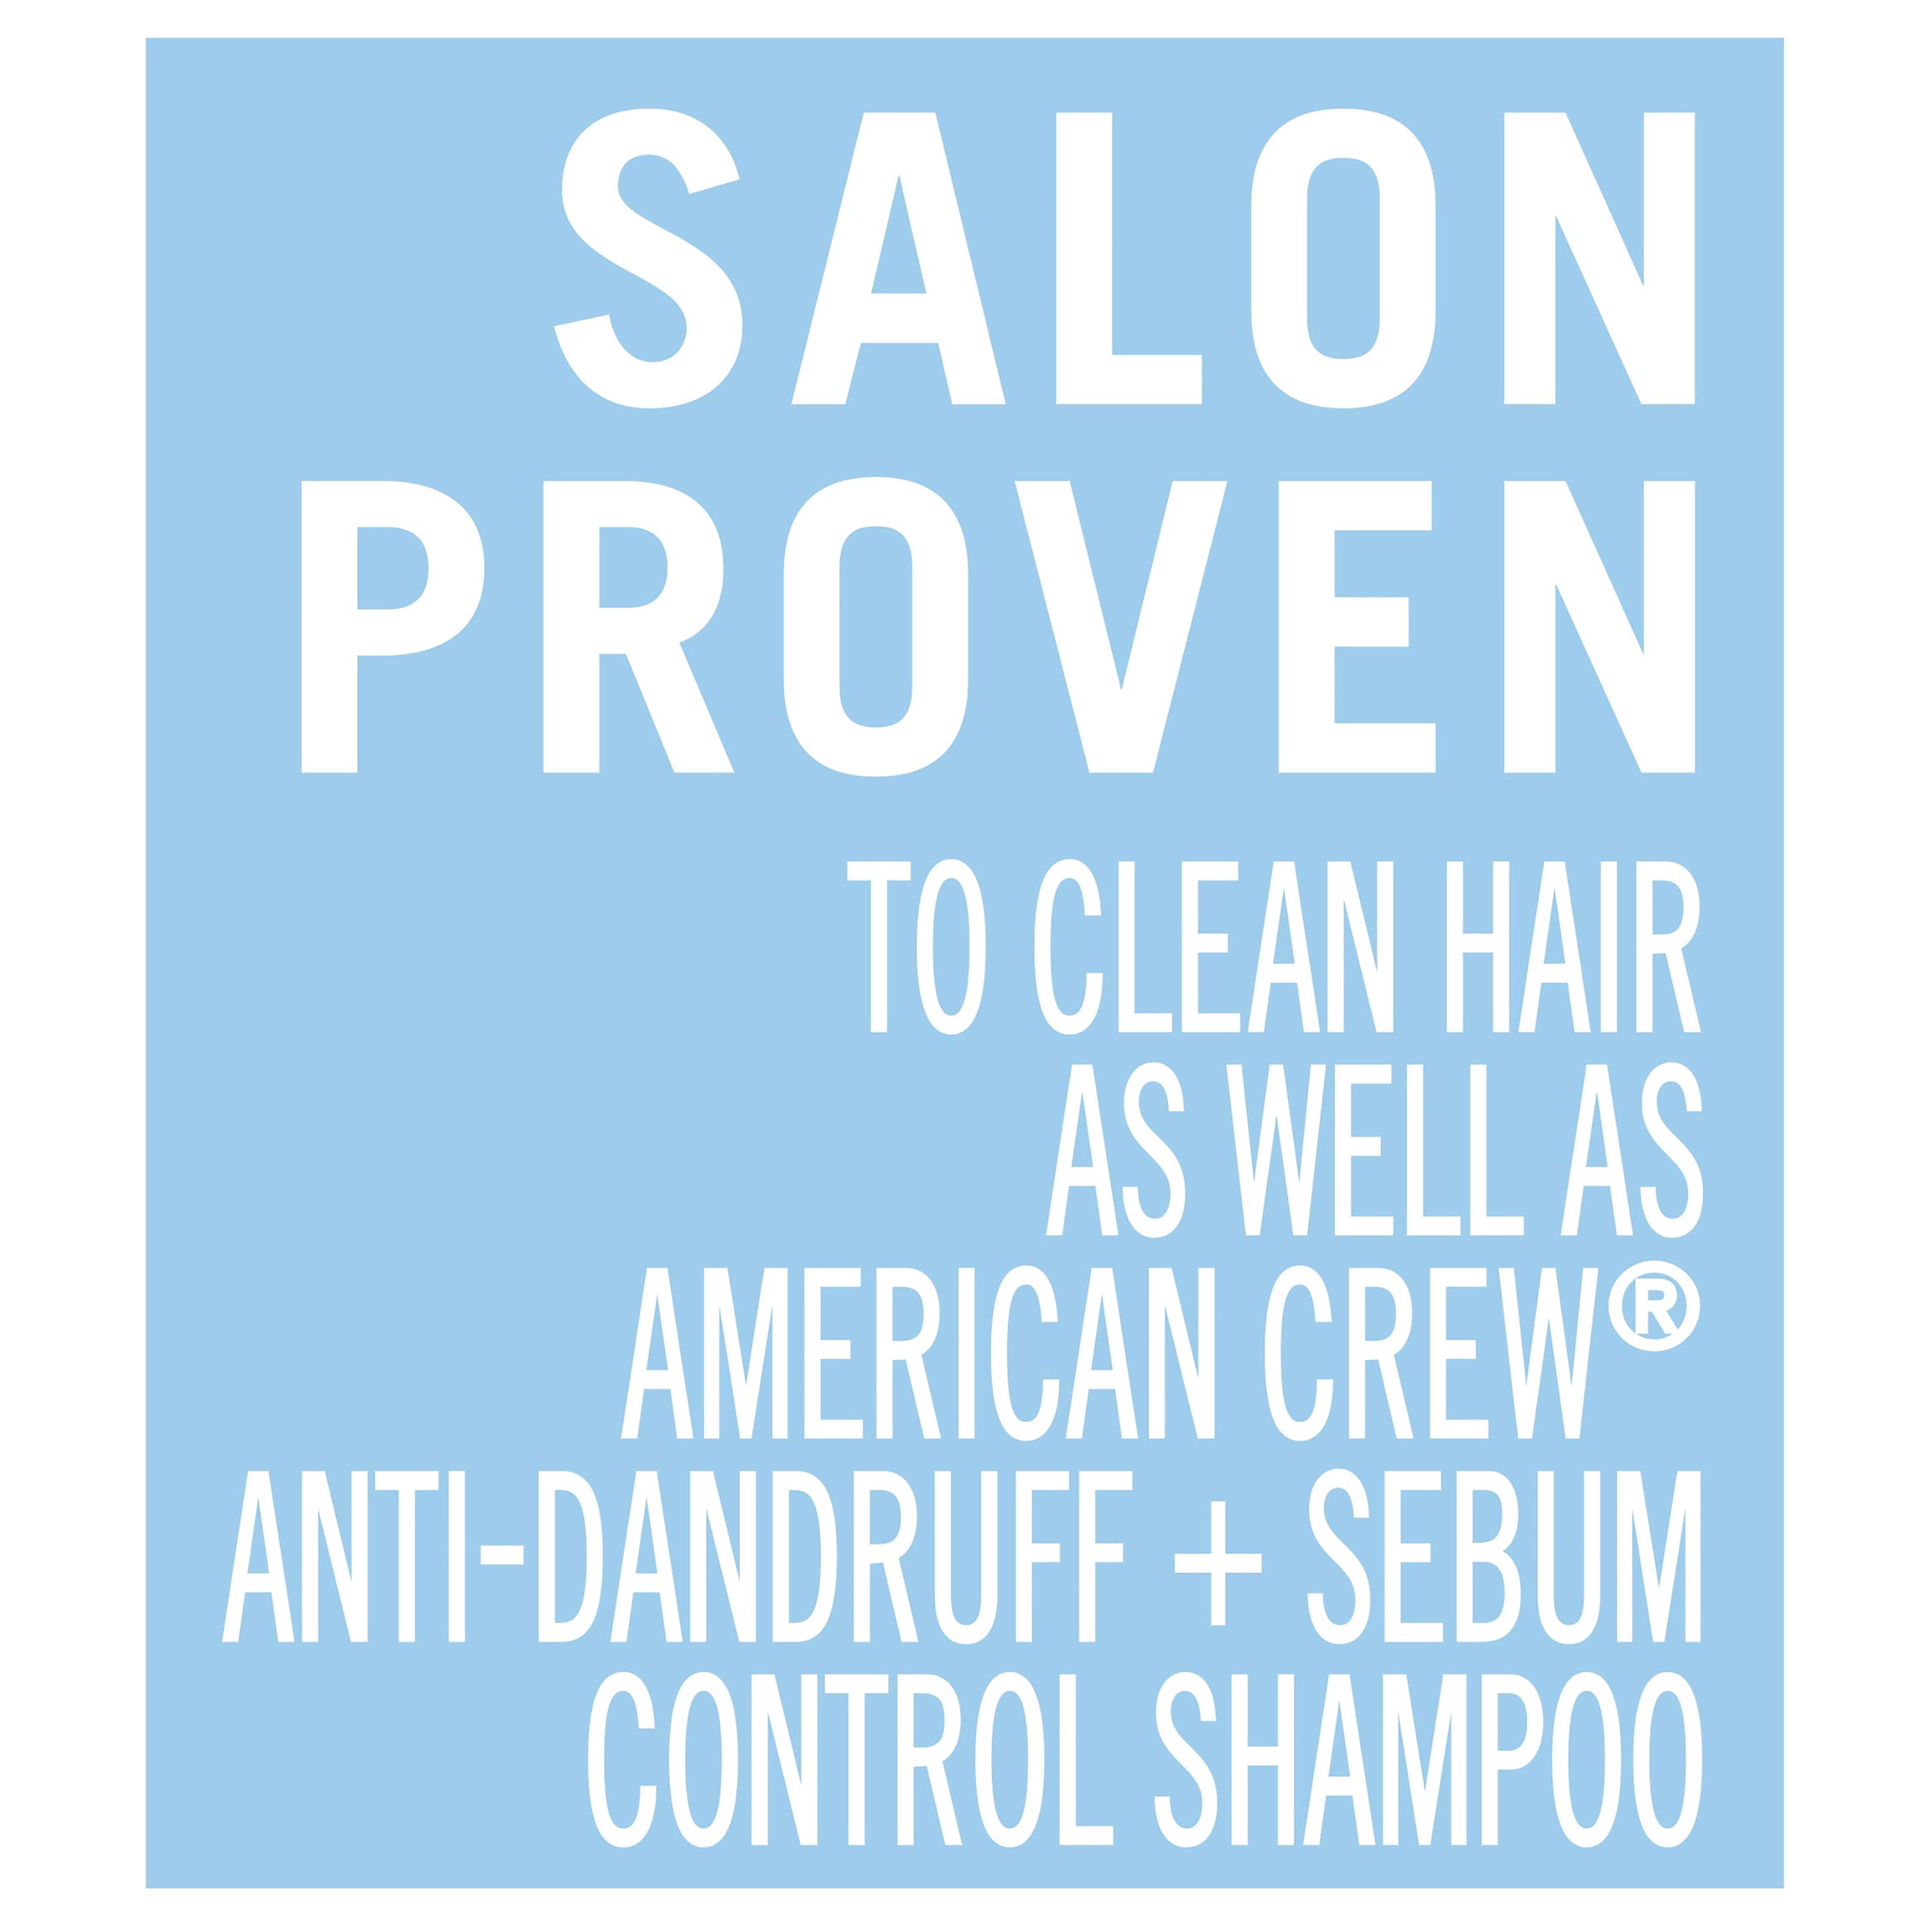 Suave Professionals Classic Clean Dandruff Relief Shampoo Plus 28 fl oz - Walmart.com